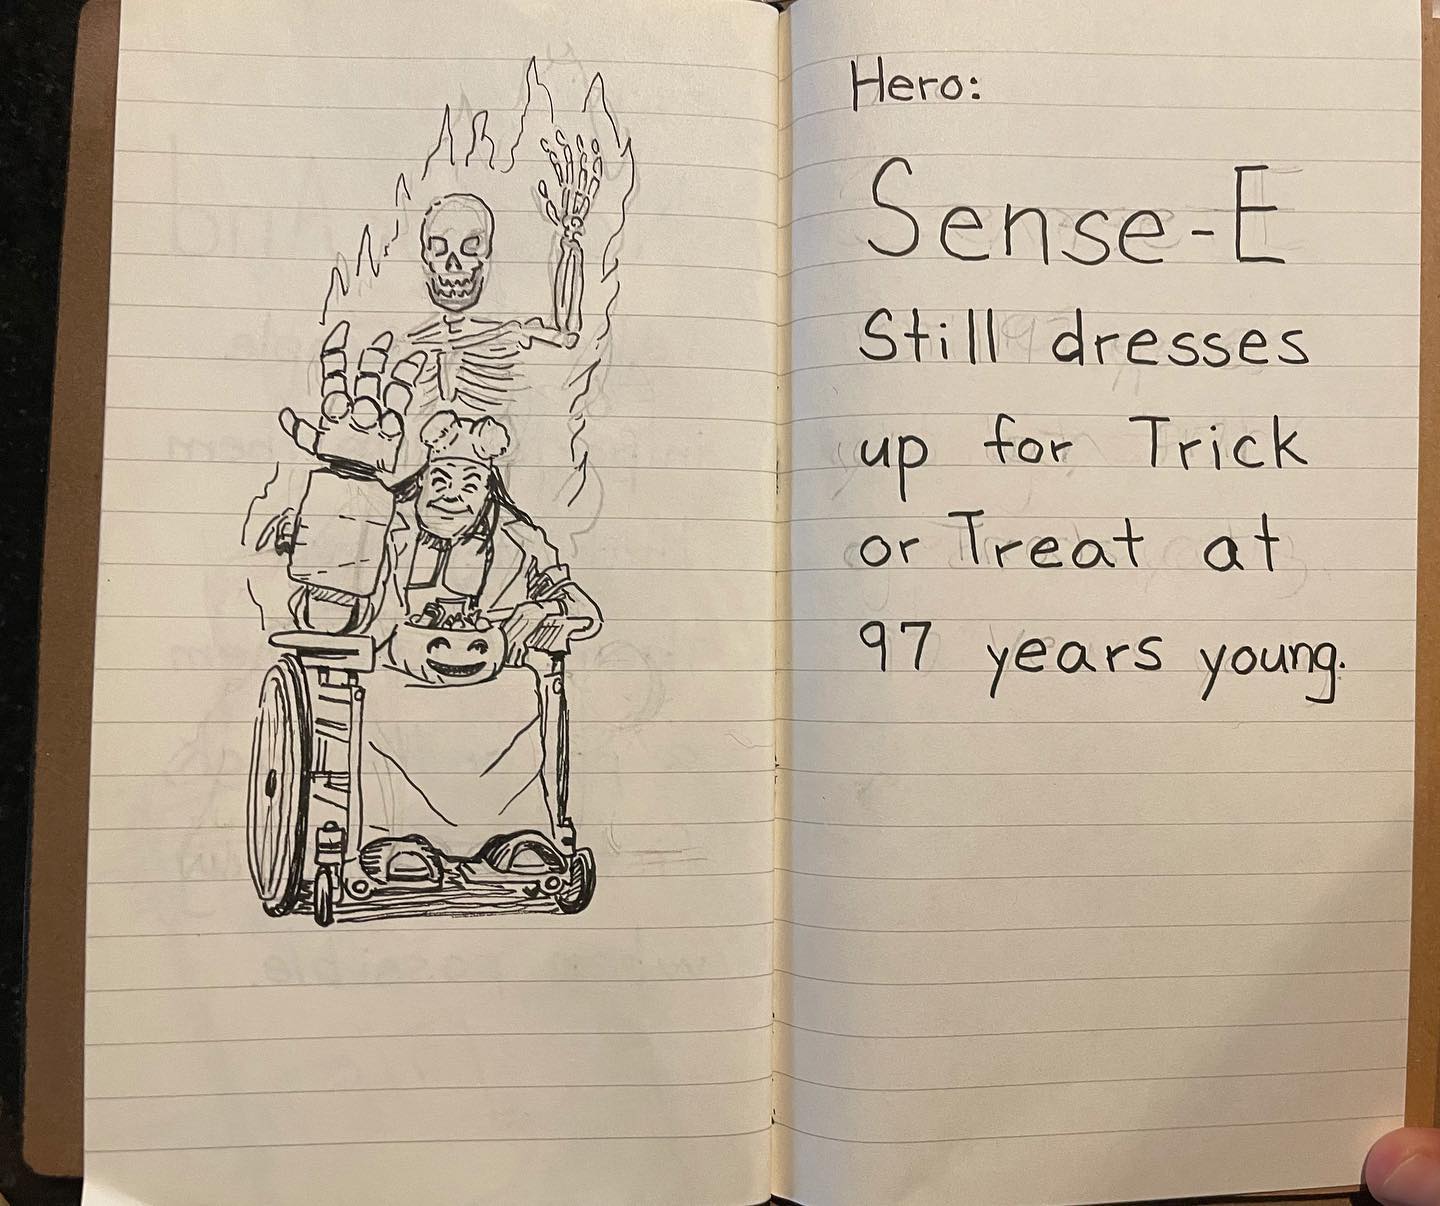 Hero: Sense-E